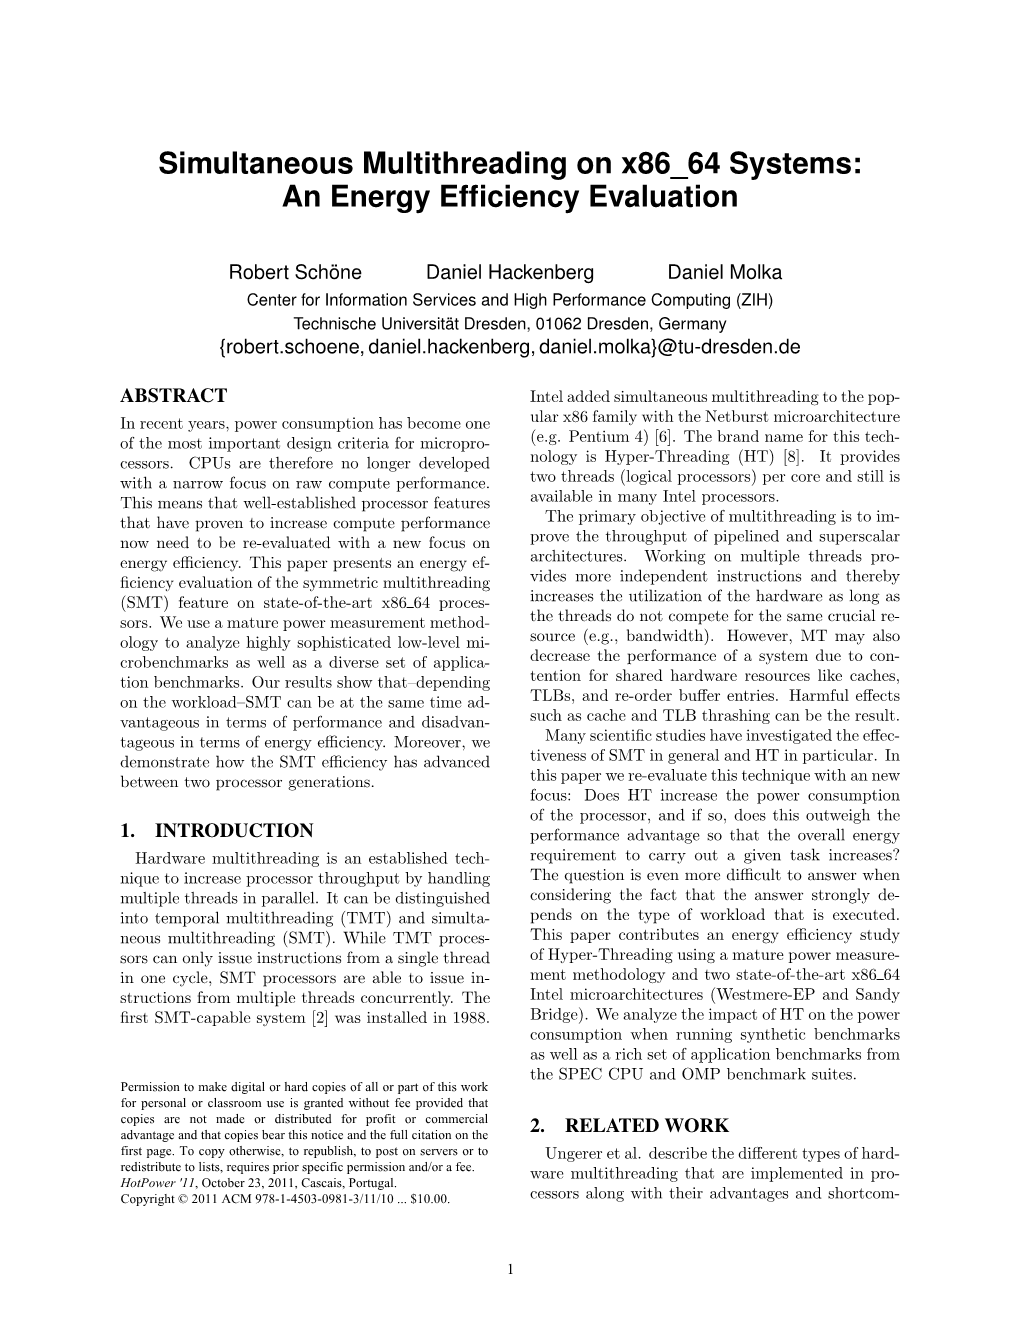 Simultaneous Multithreading on X86 64 Systems: an Energy Efﬁciency Evaluation